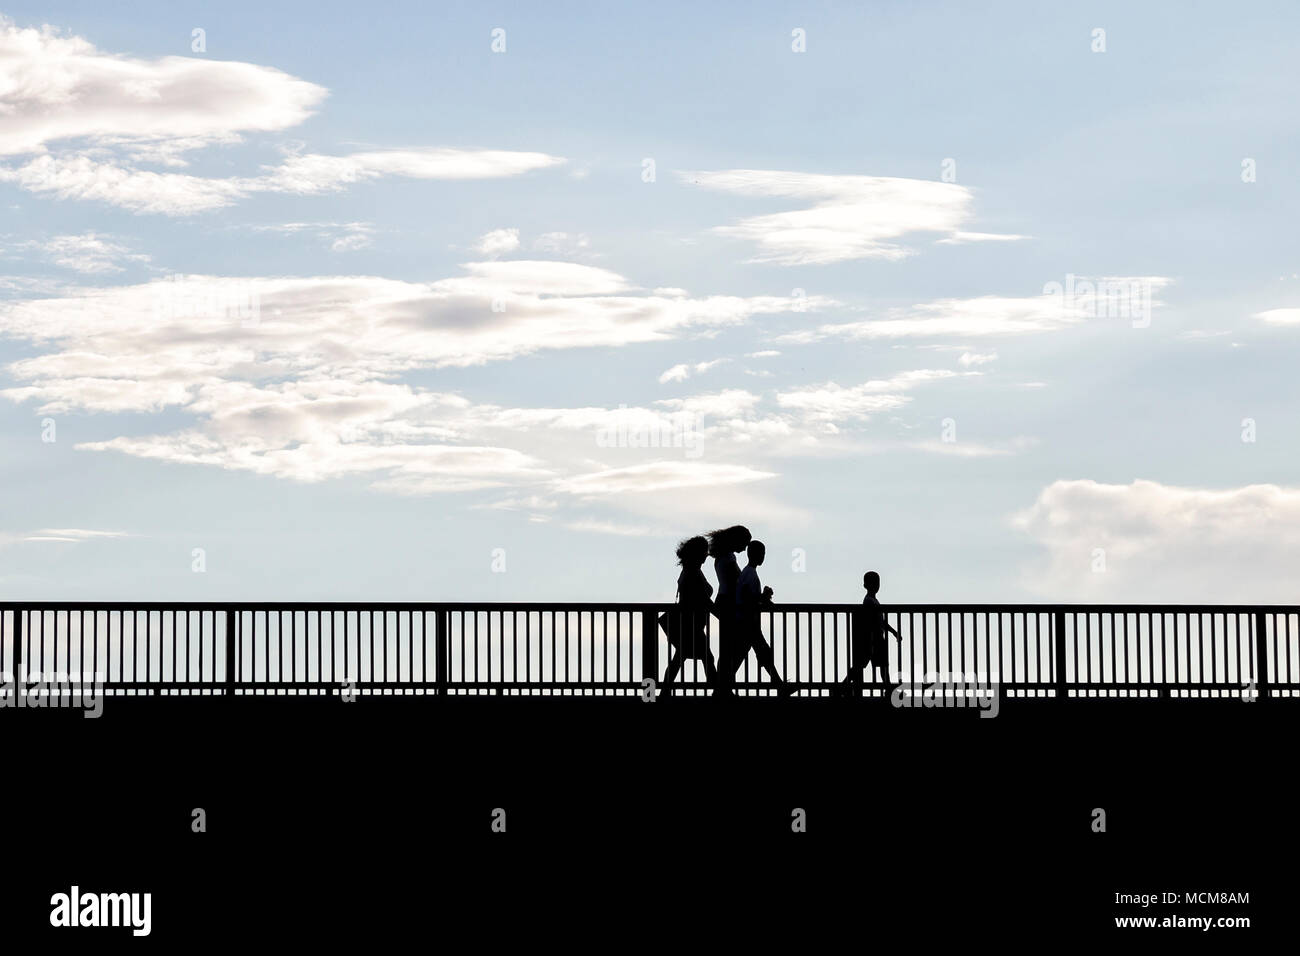 Silhouette of people walking across the bridge Stock Photo